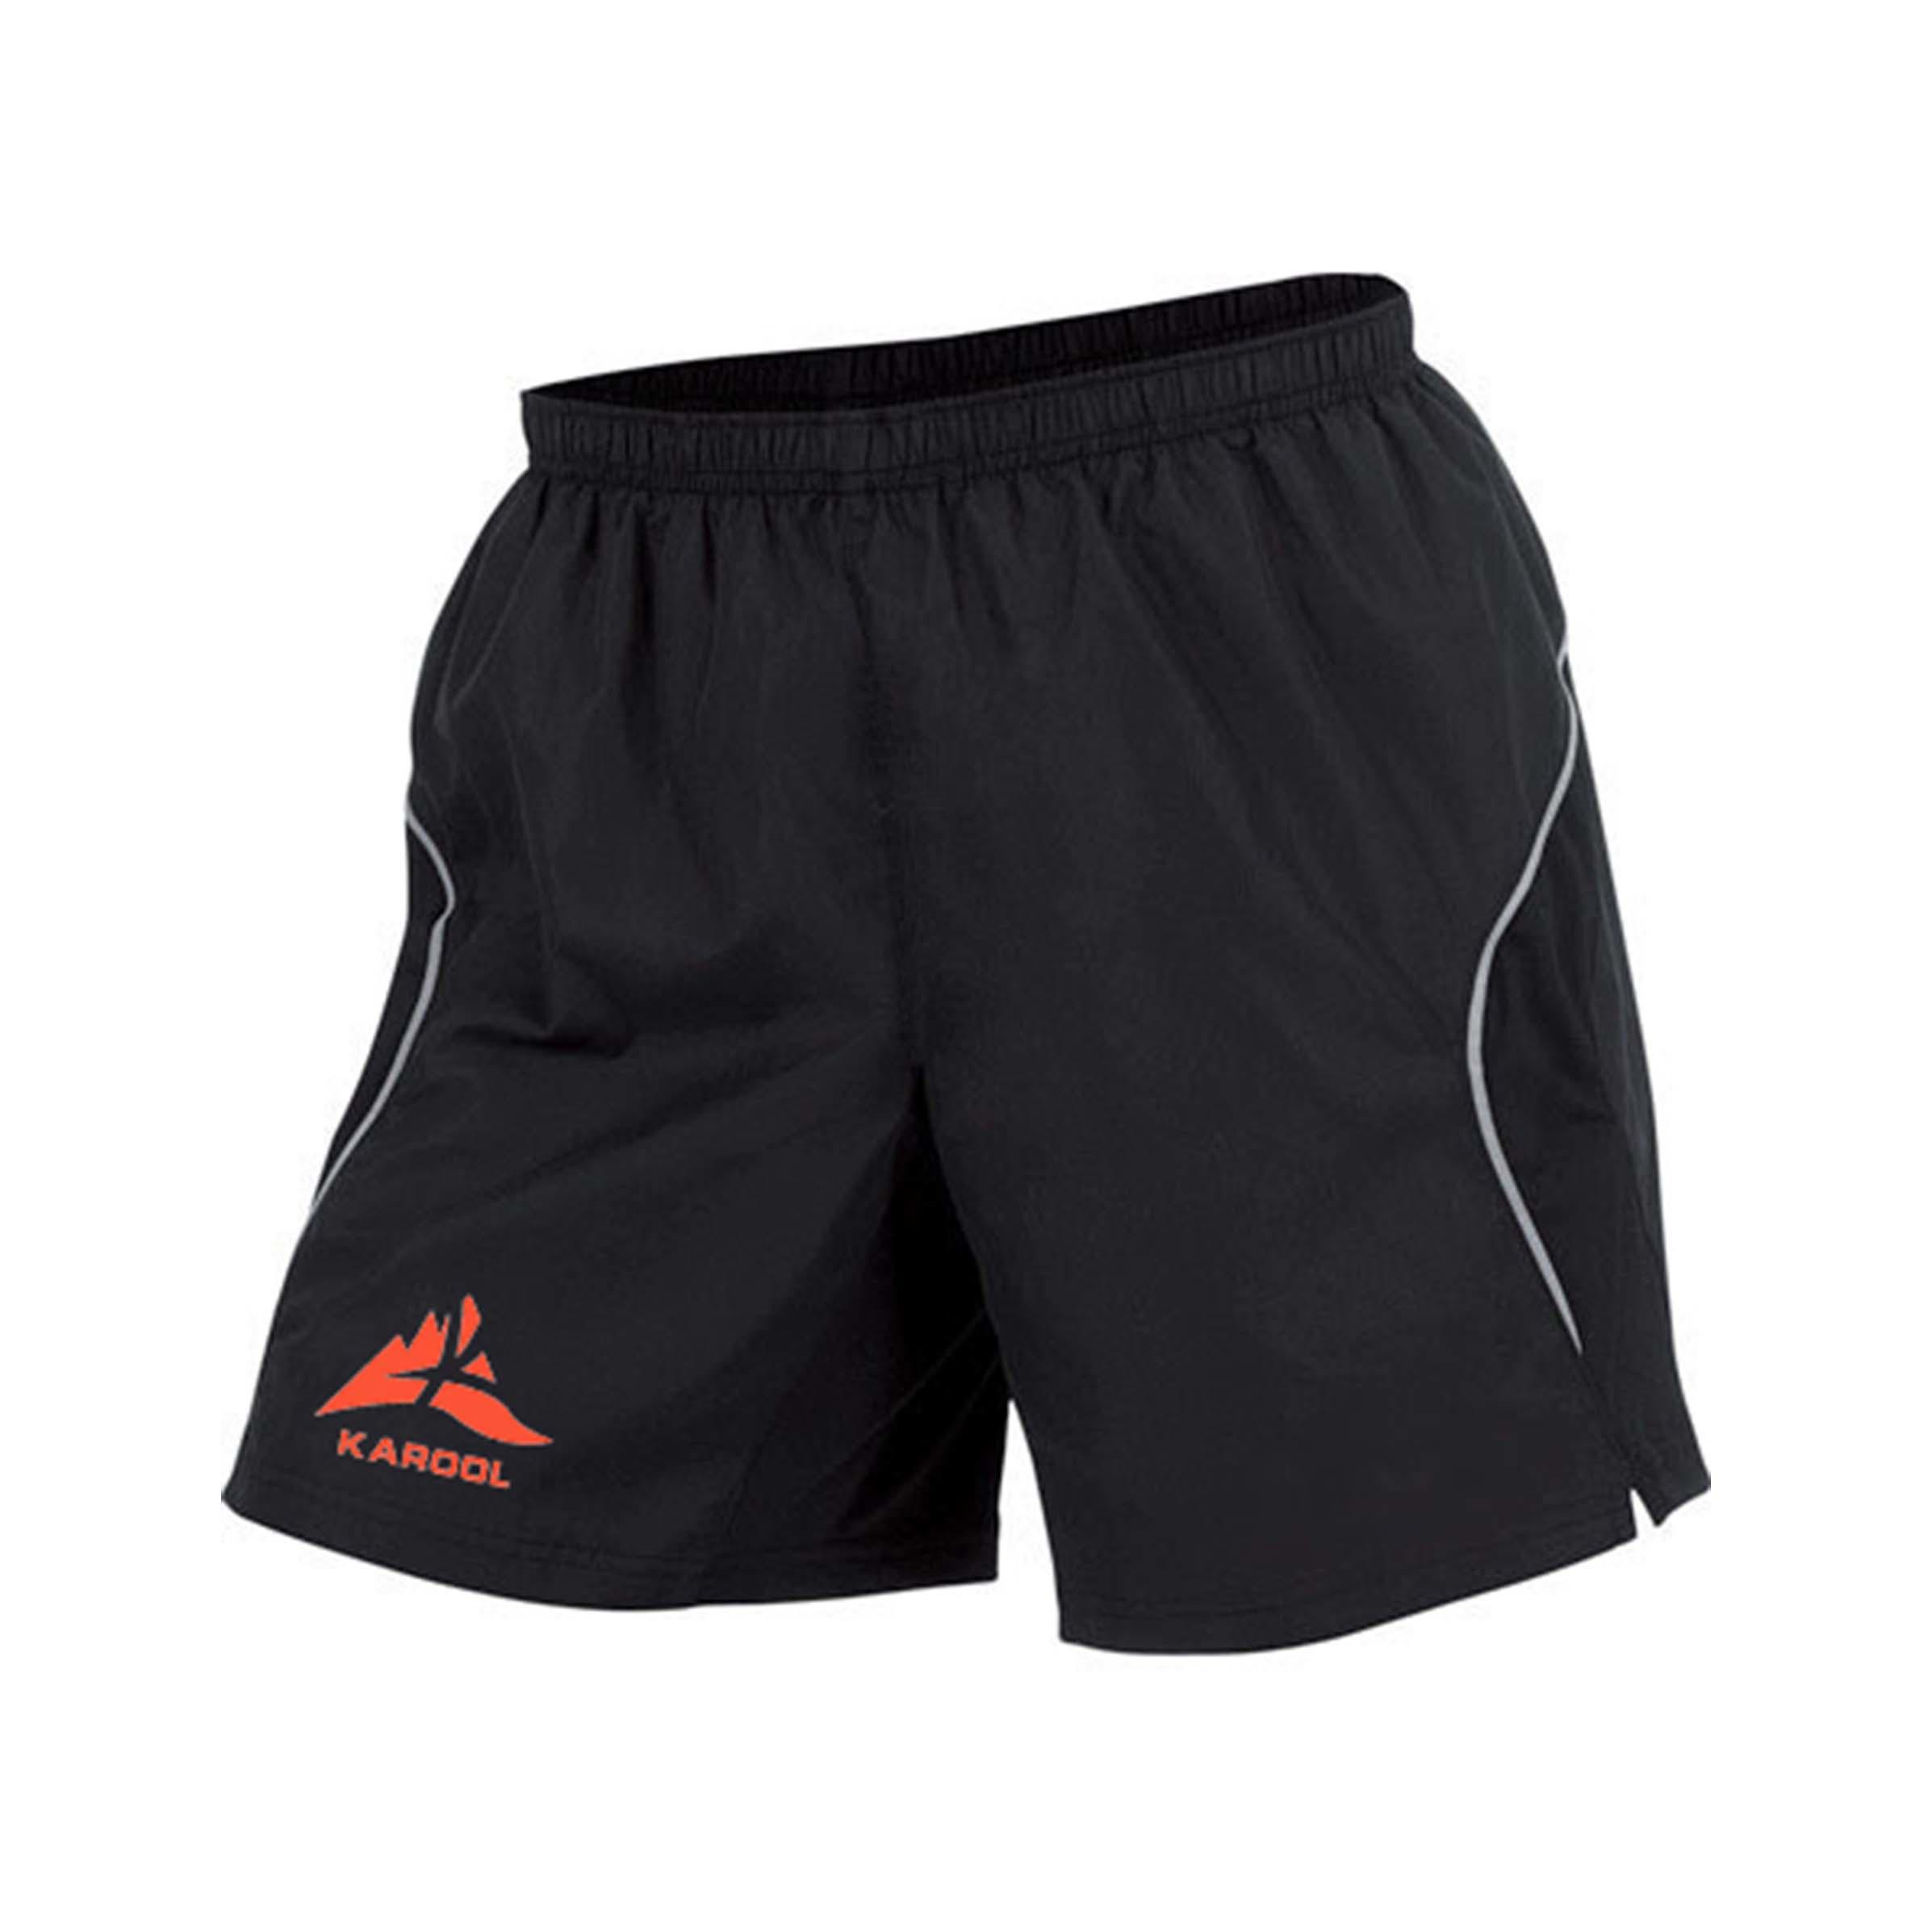 Karool womens athletic shorts wholesale for men-1